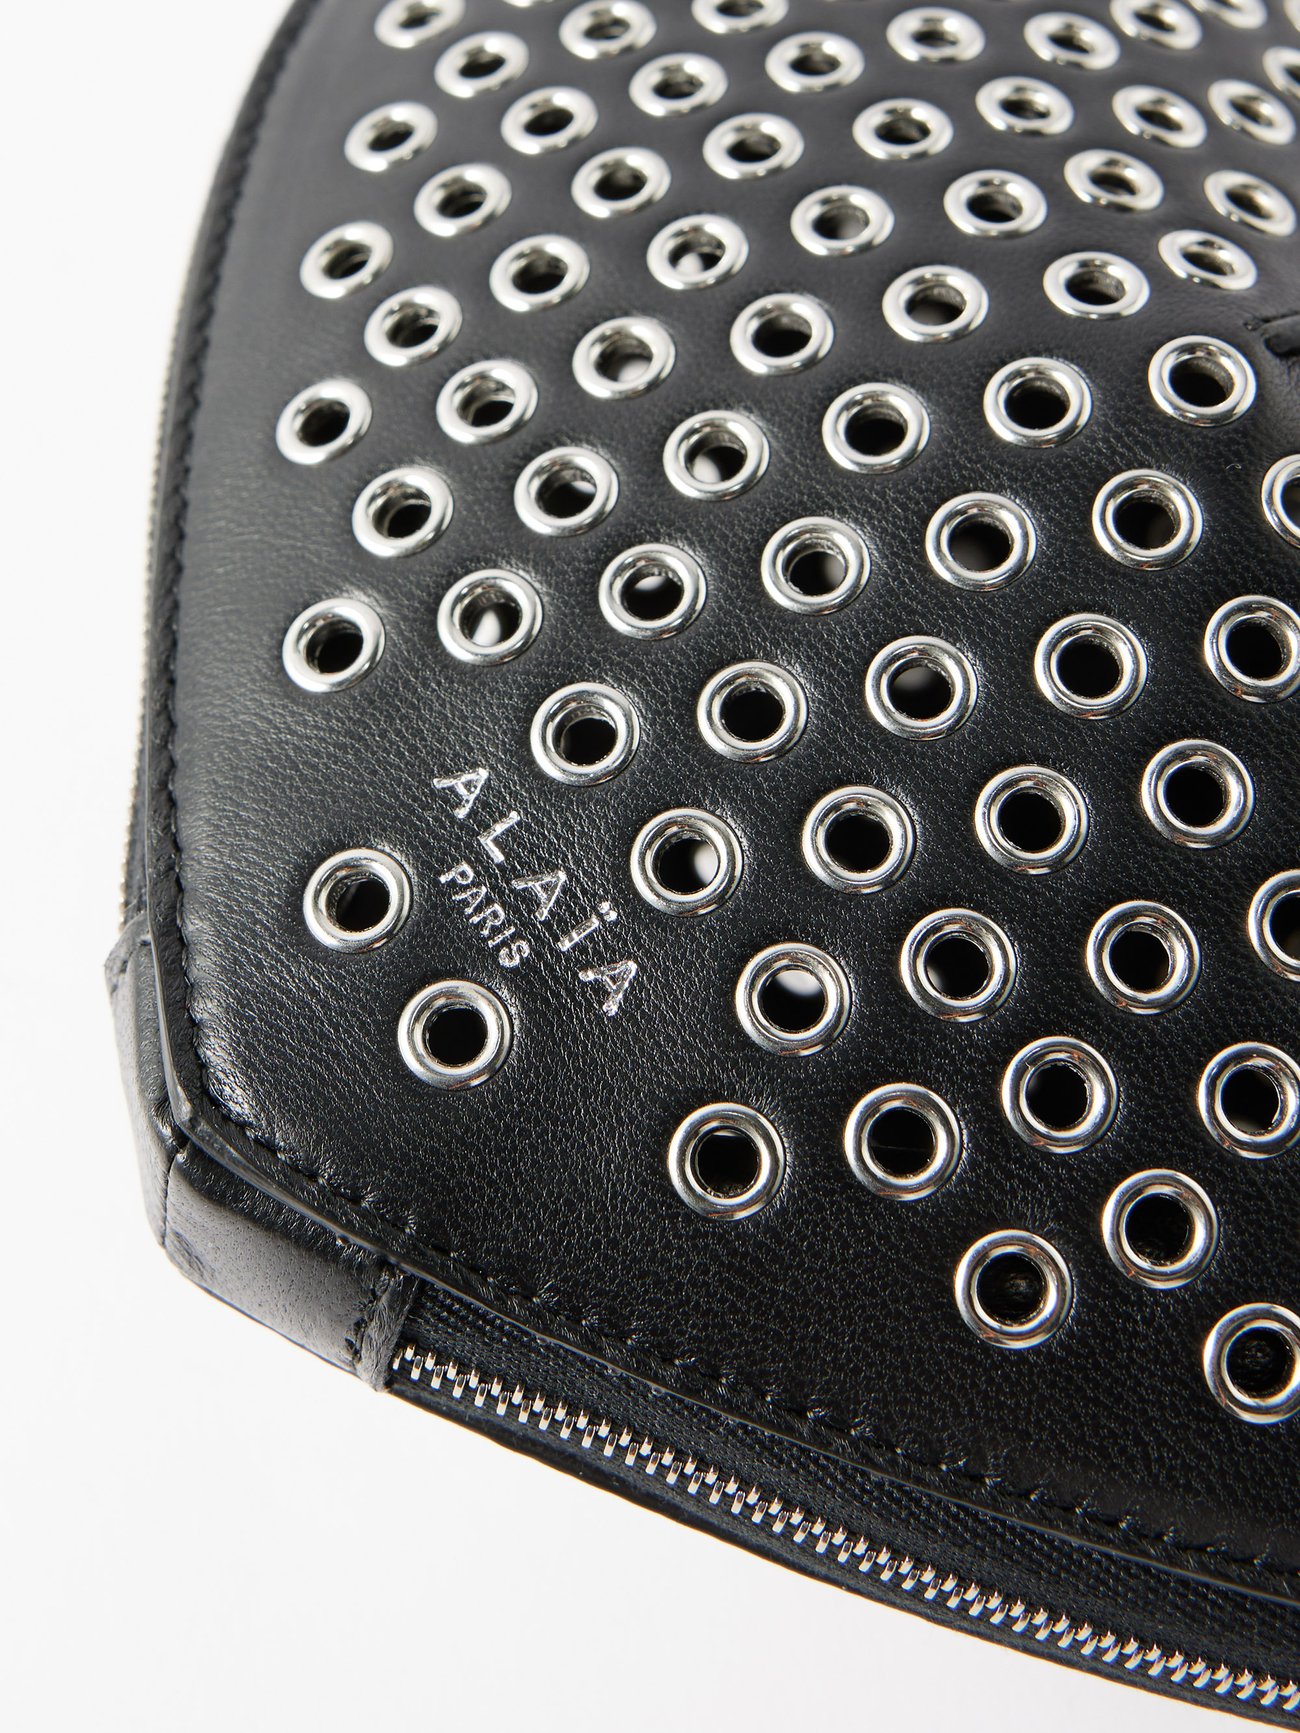 Le Coeur Studded Leather Crossbody Bag in Black - Alaia